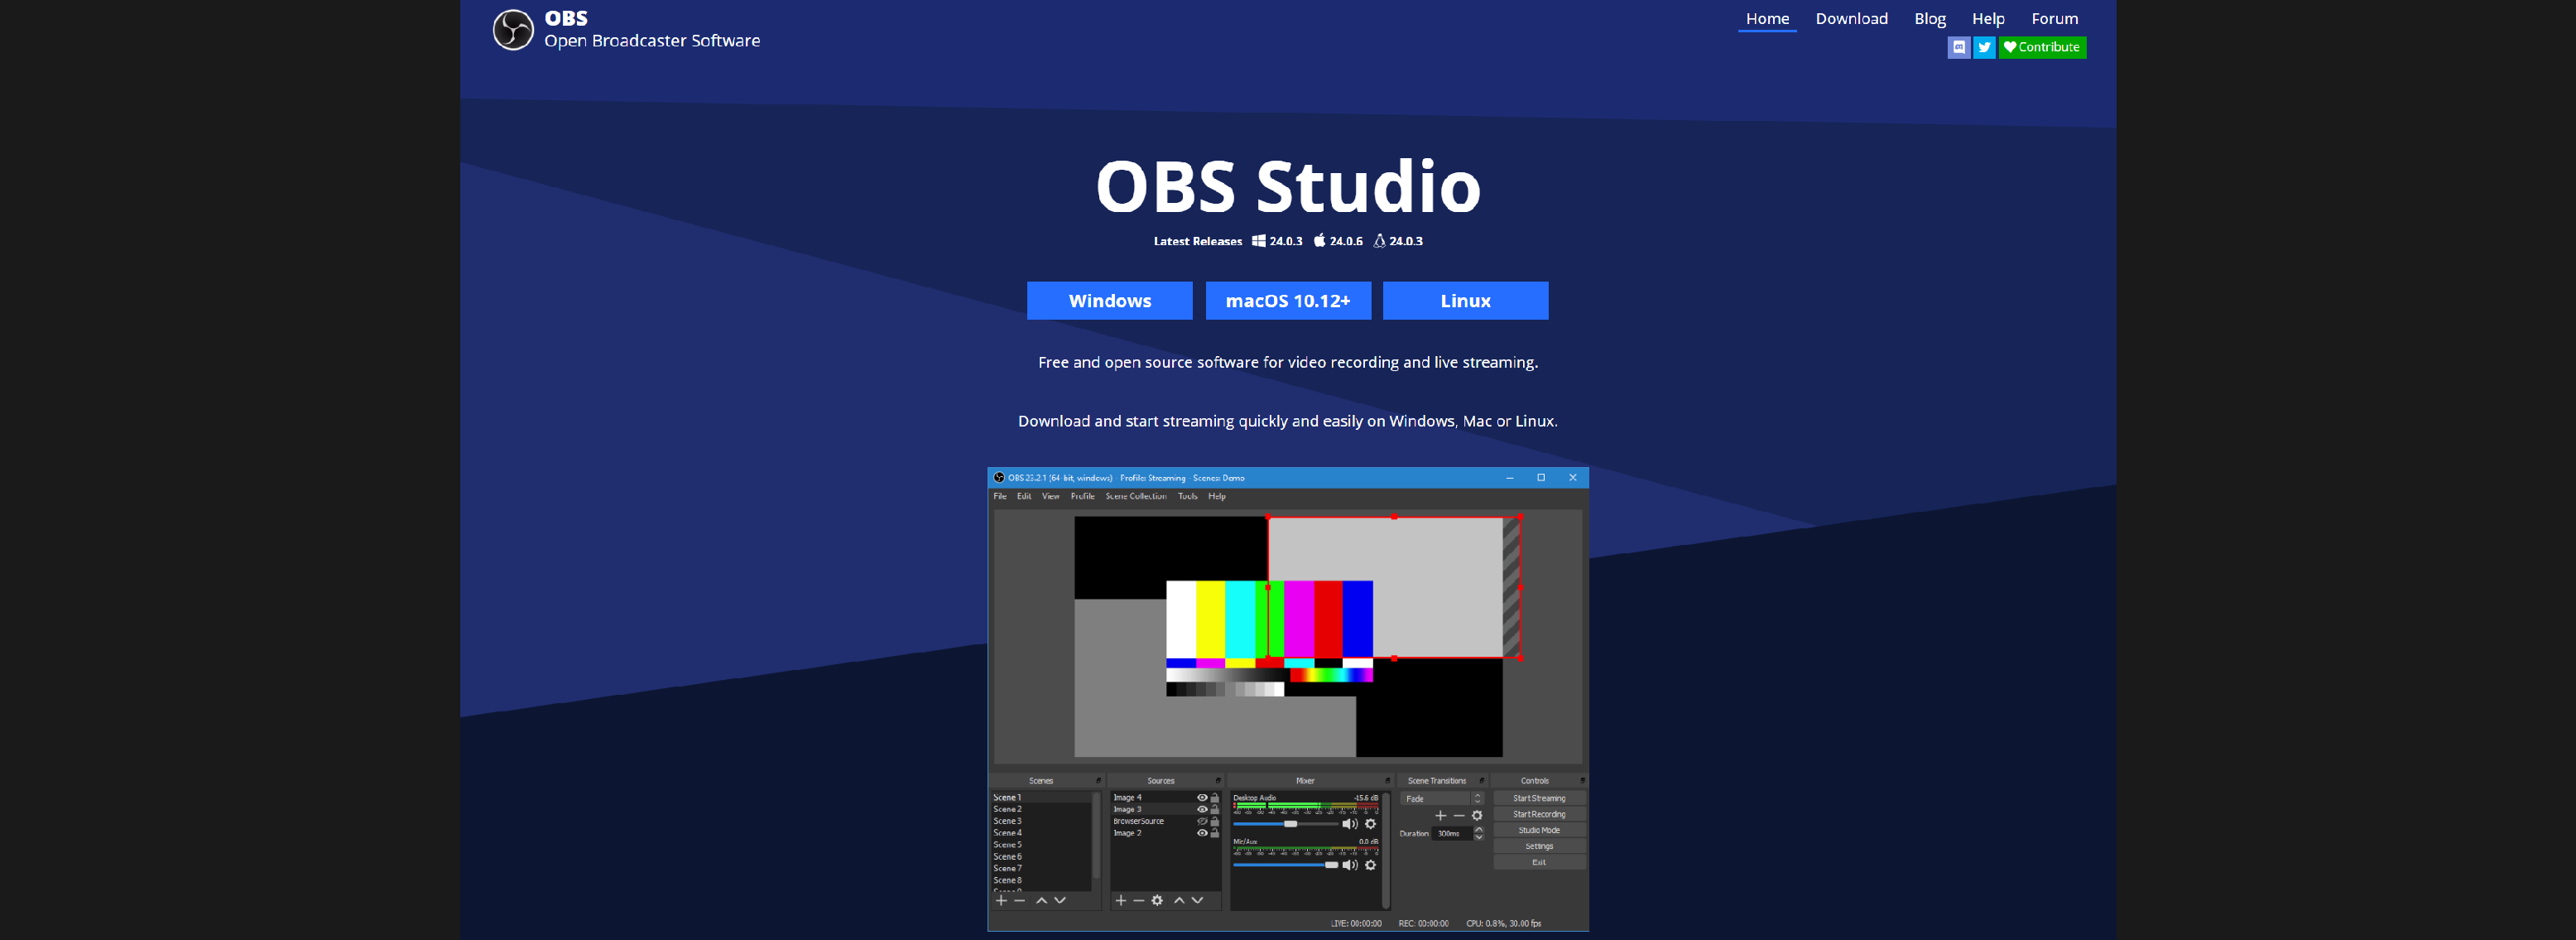 obs studio download for windows 7 32 bit